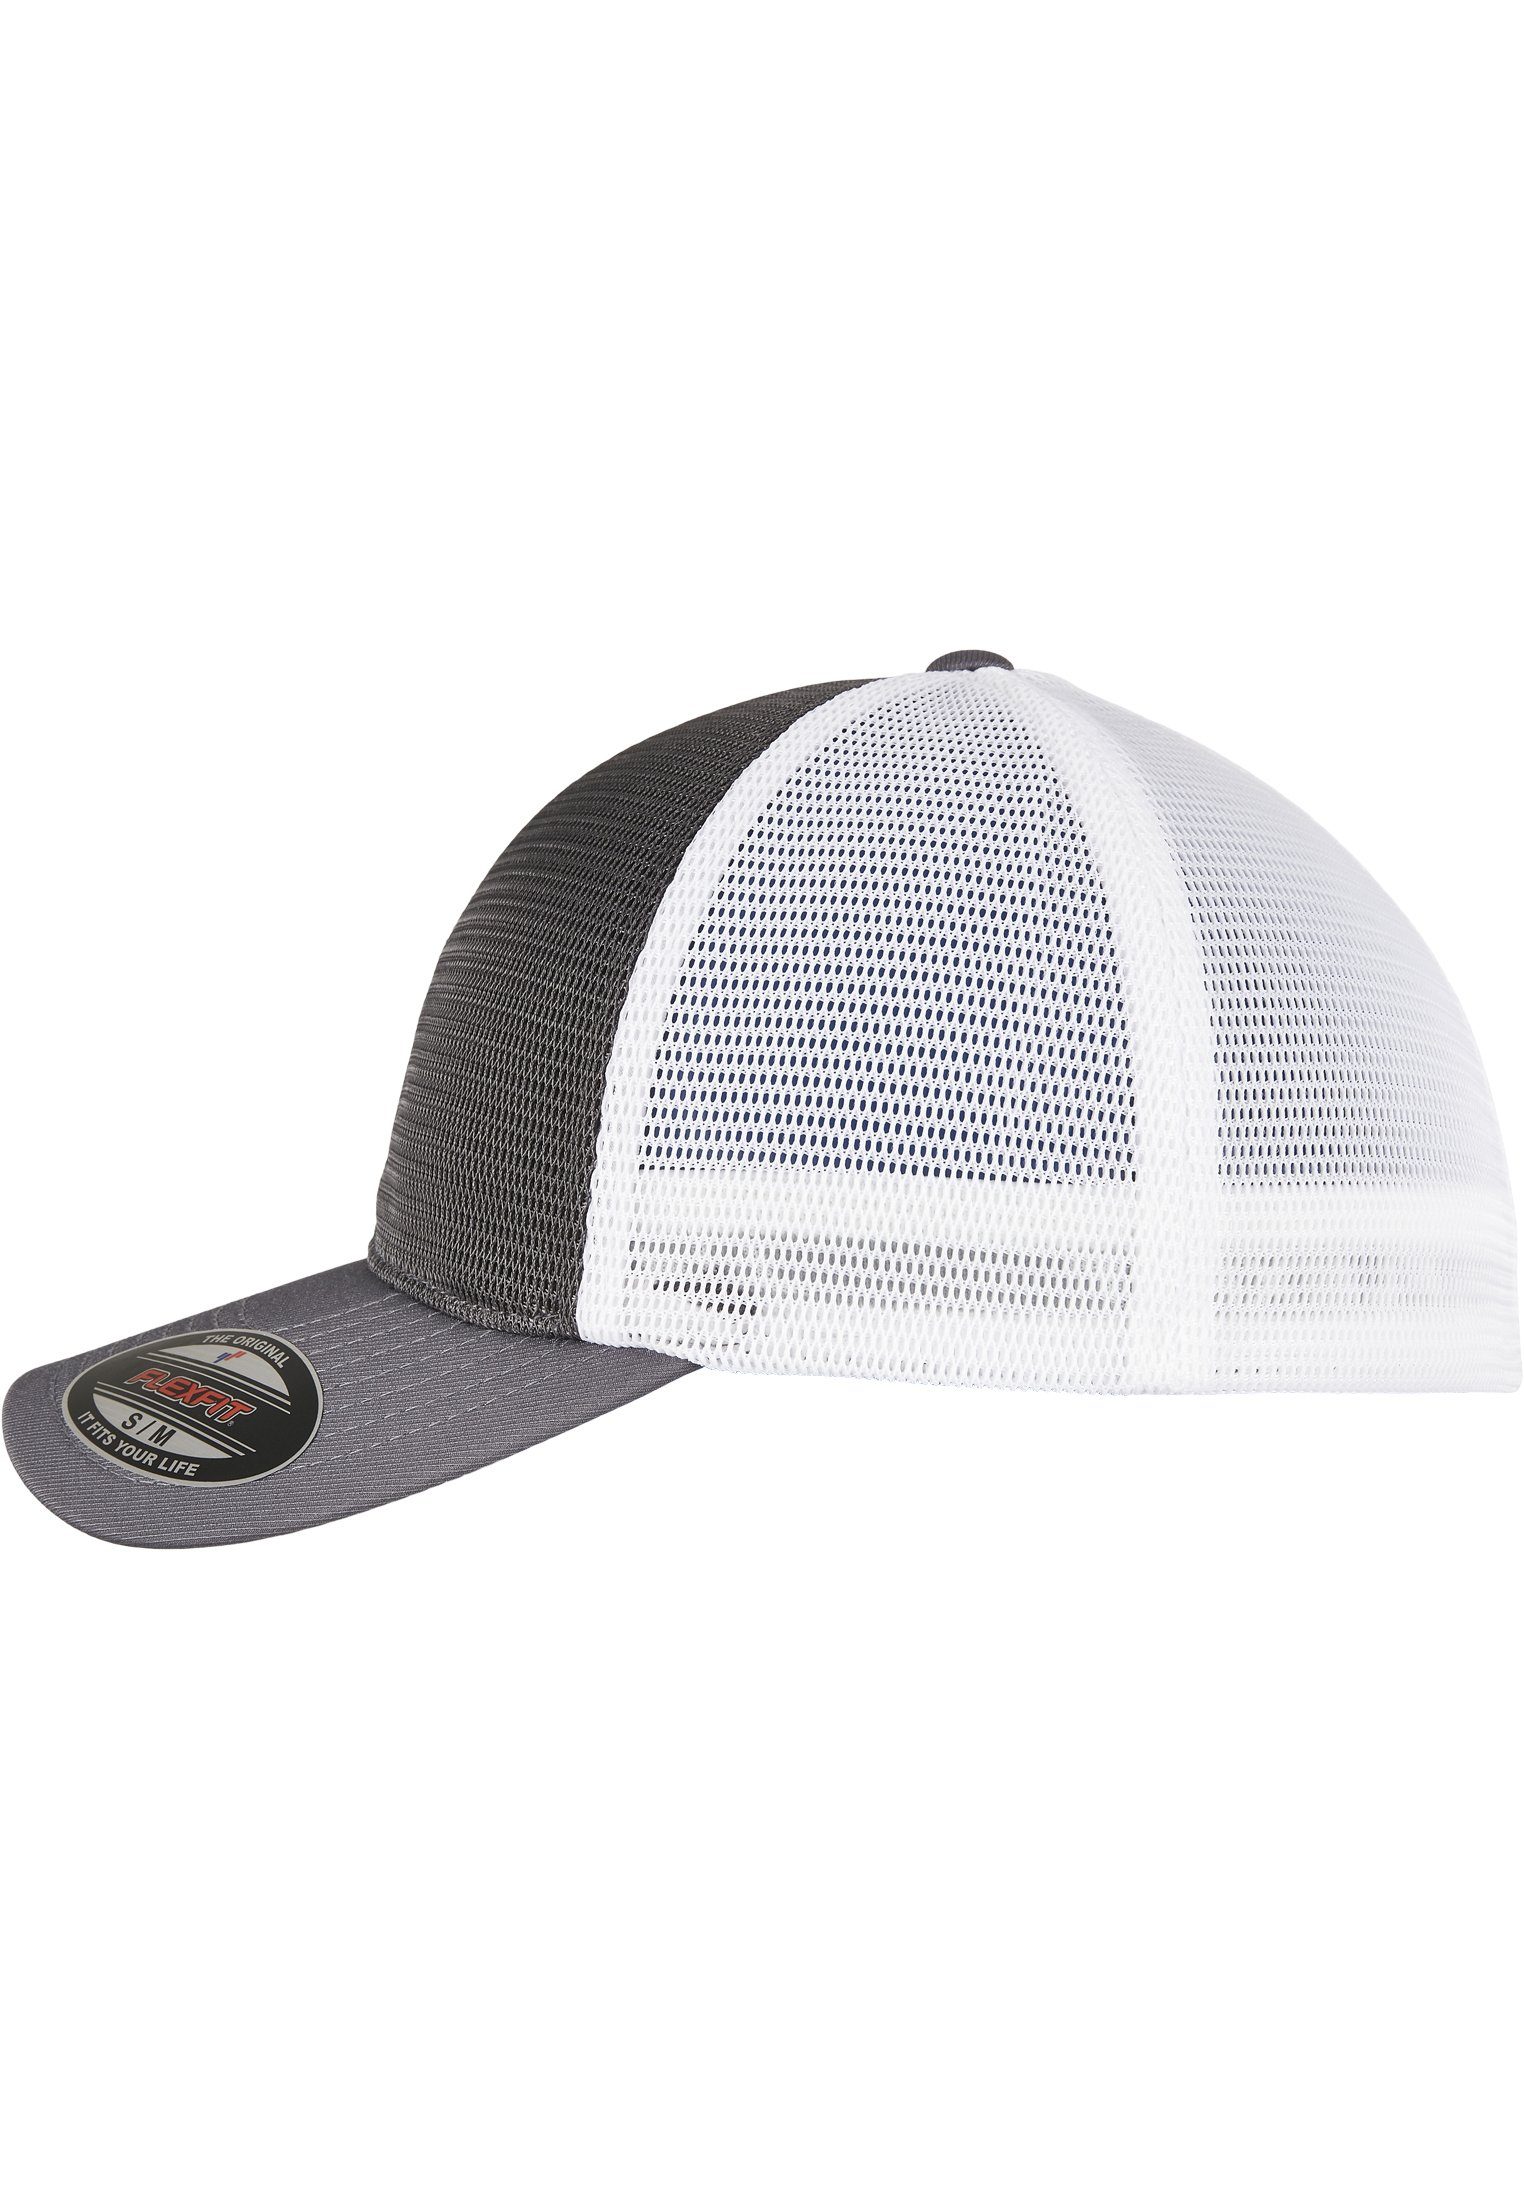 Kollektion 2-TONE CAP Flexfit charcoal/white Flex Neue 360 FLEXFIT OMNIMESH Cap